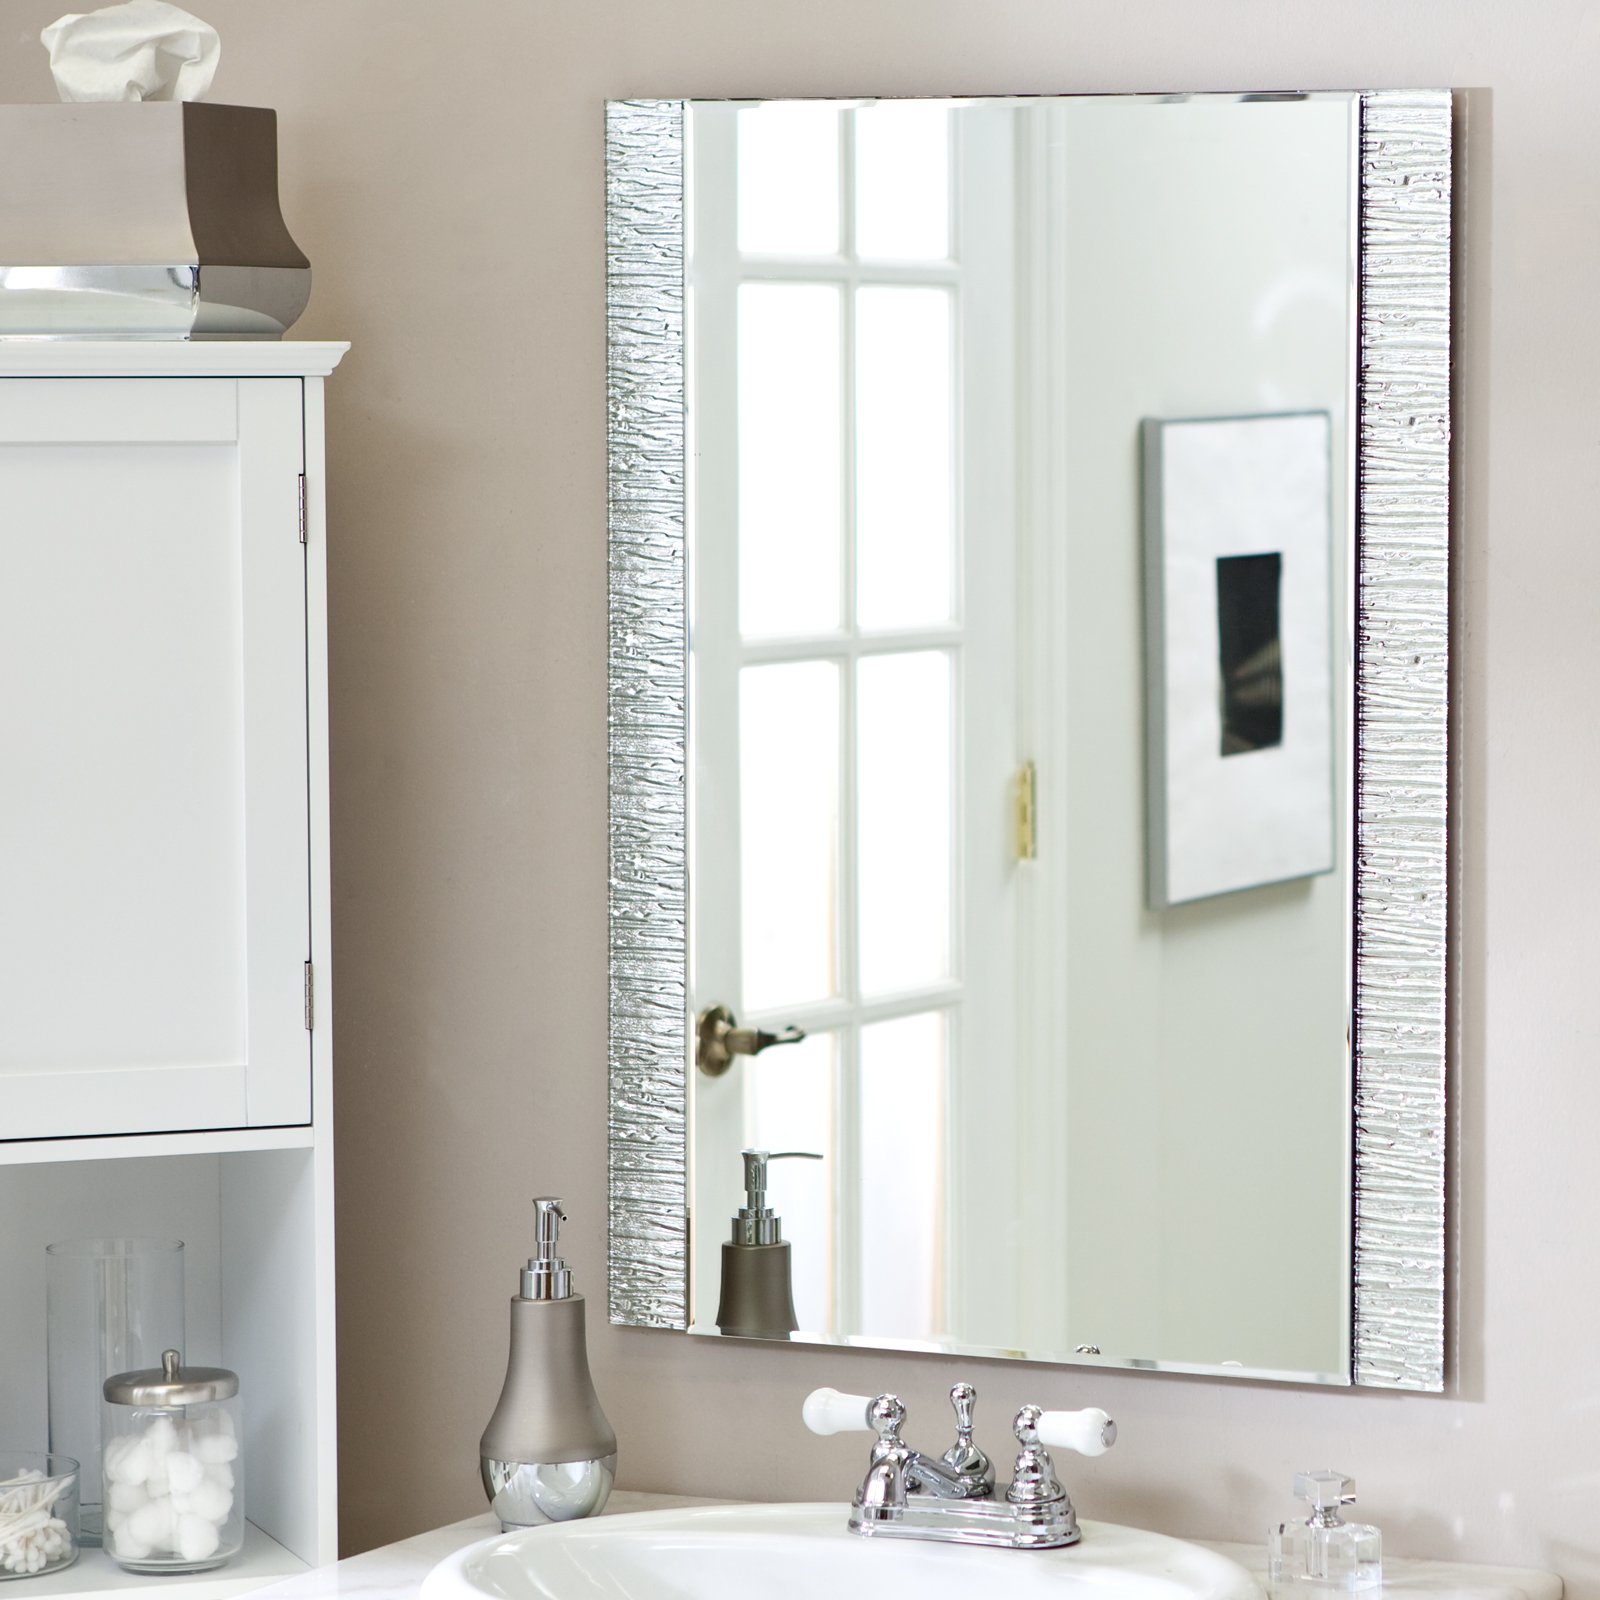 Bathroom Mirrors Design and Ideas - InspirationSeek.com